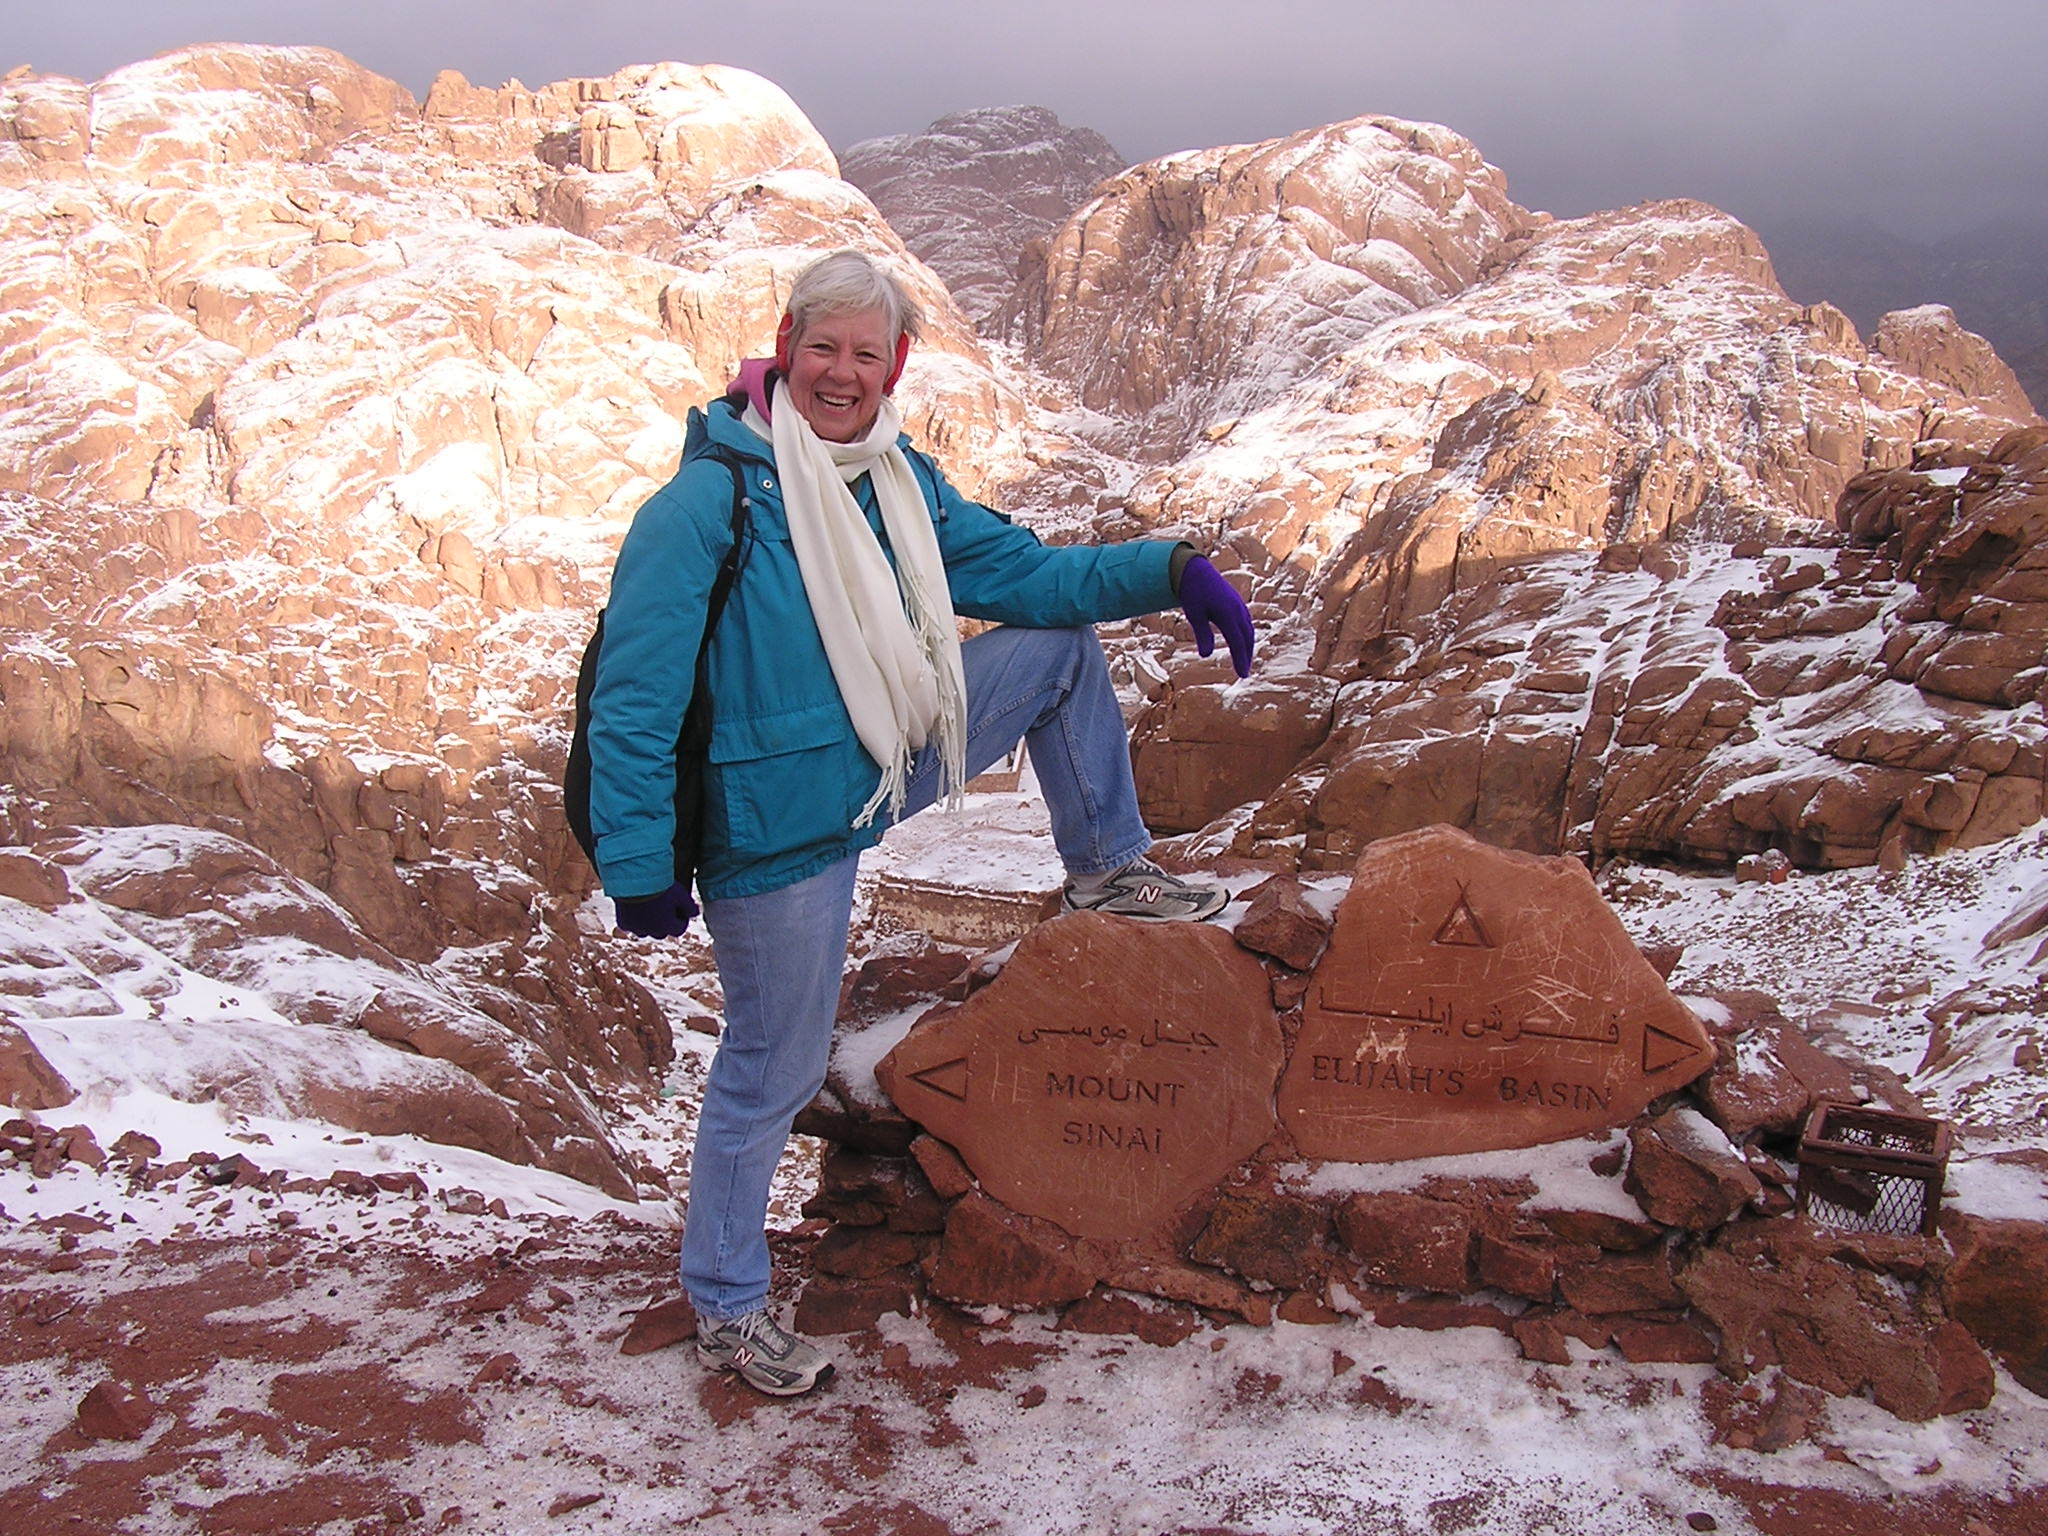 Ann on Sinai rock.jpg